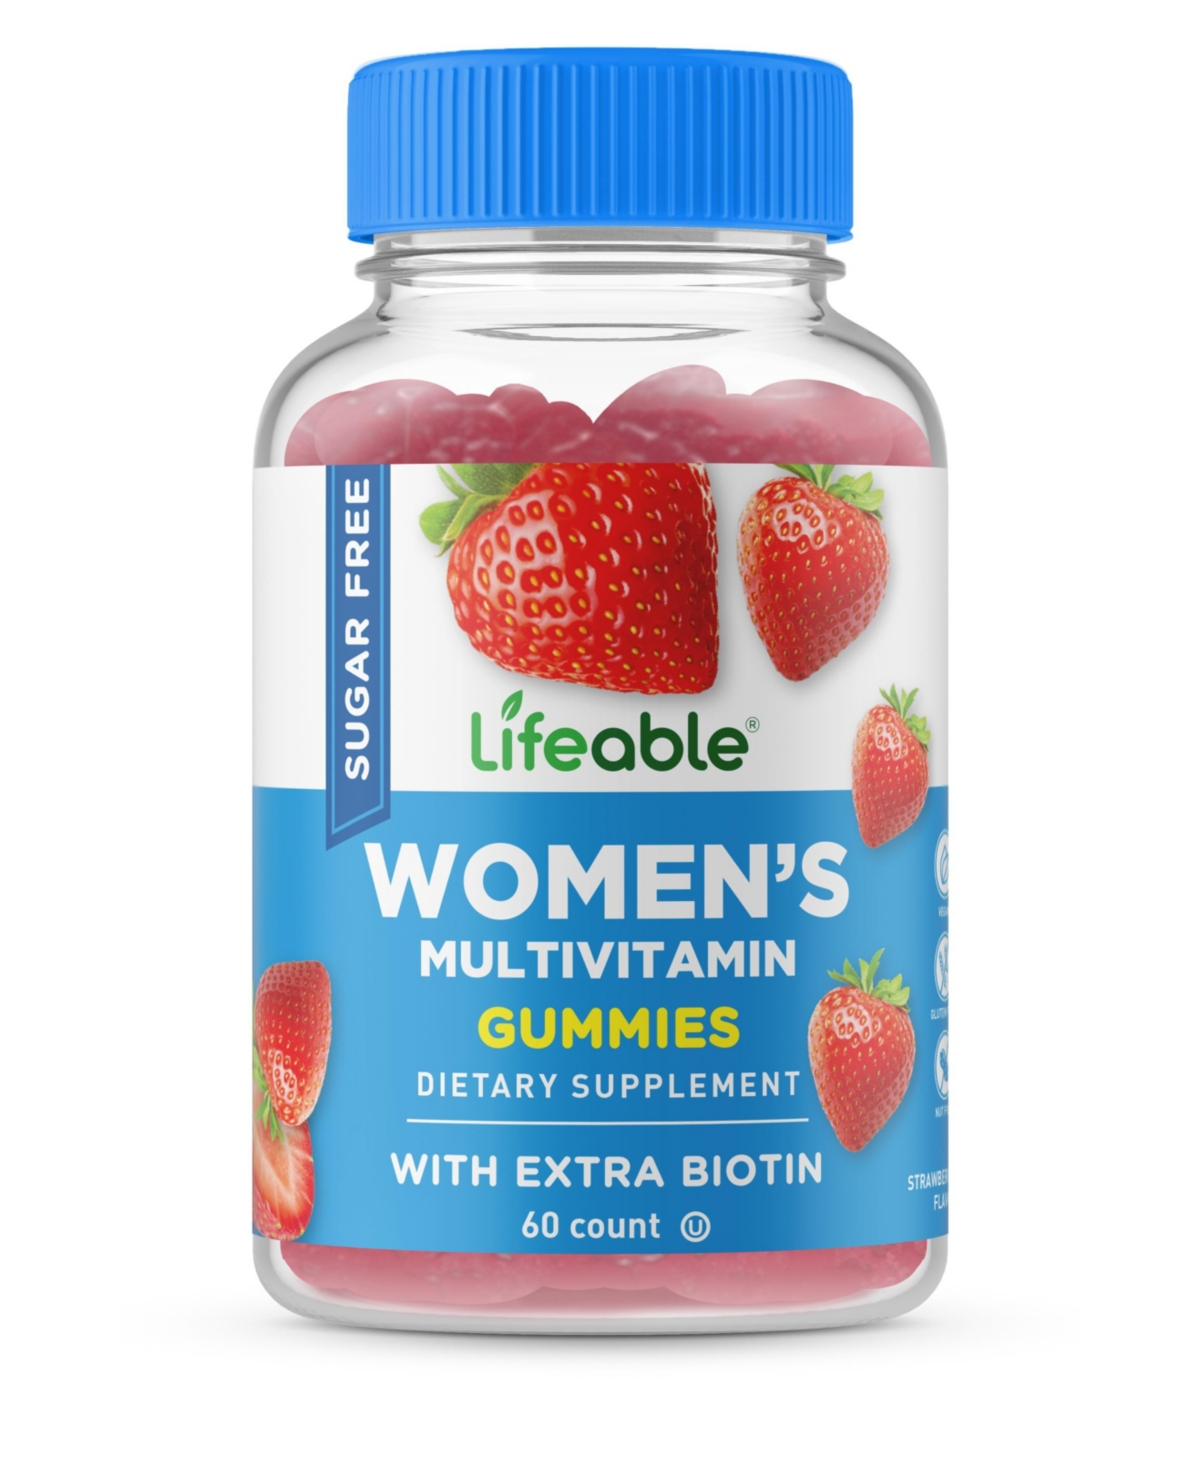 Sugar Free Multivitamin for Women Gummies - Immunity, Digestion, Bones, And Skin - Great Tasting, Dietary Supplement Vitamins - 60 Gummies